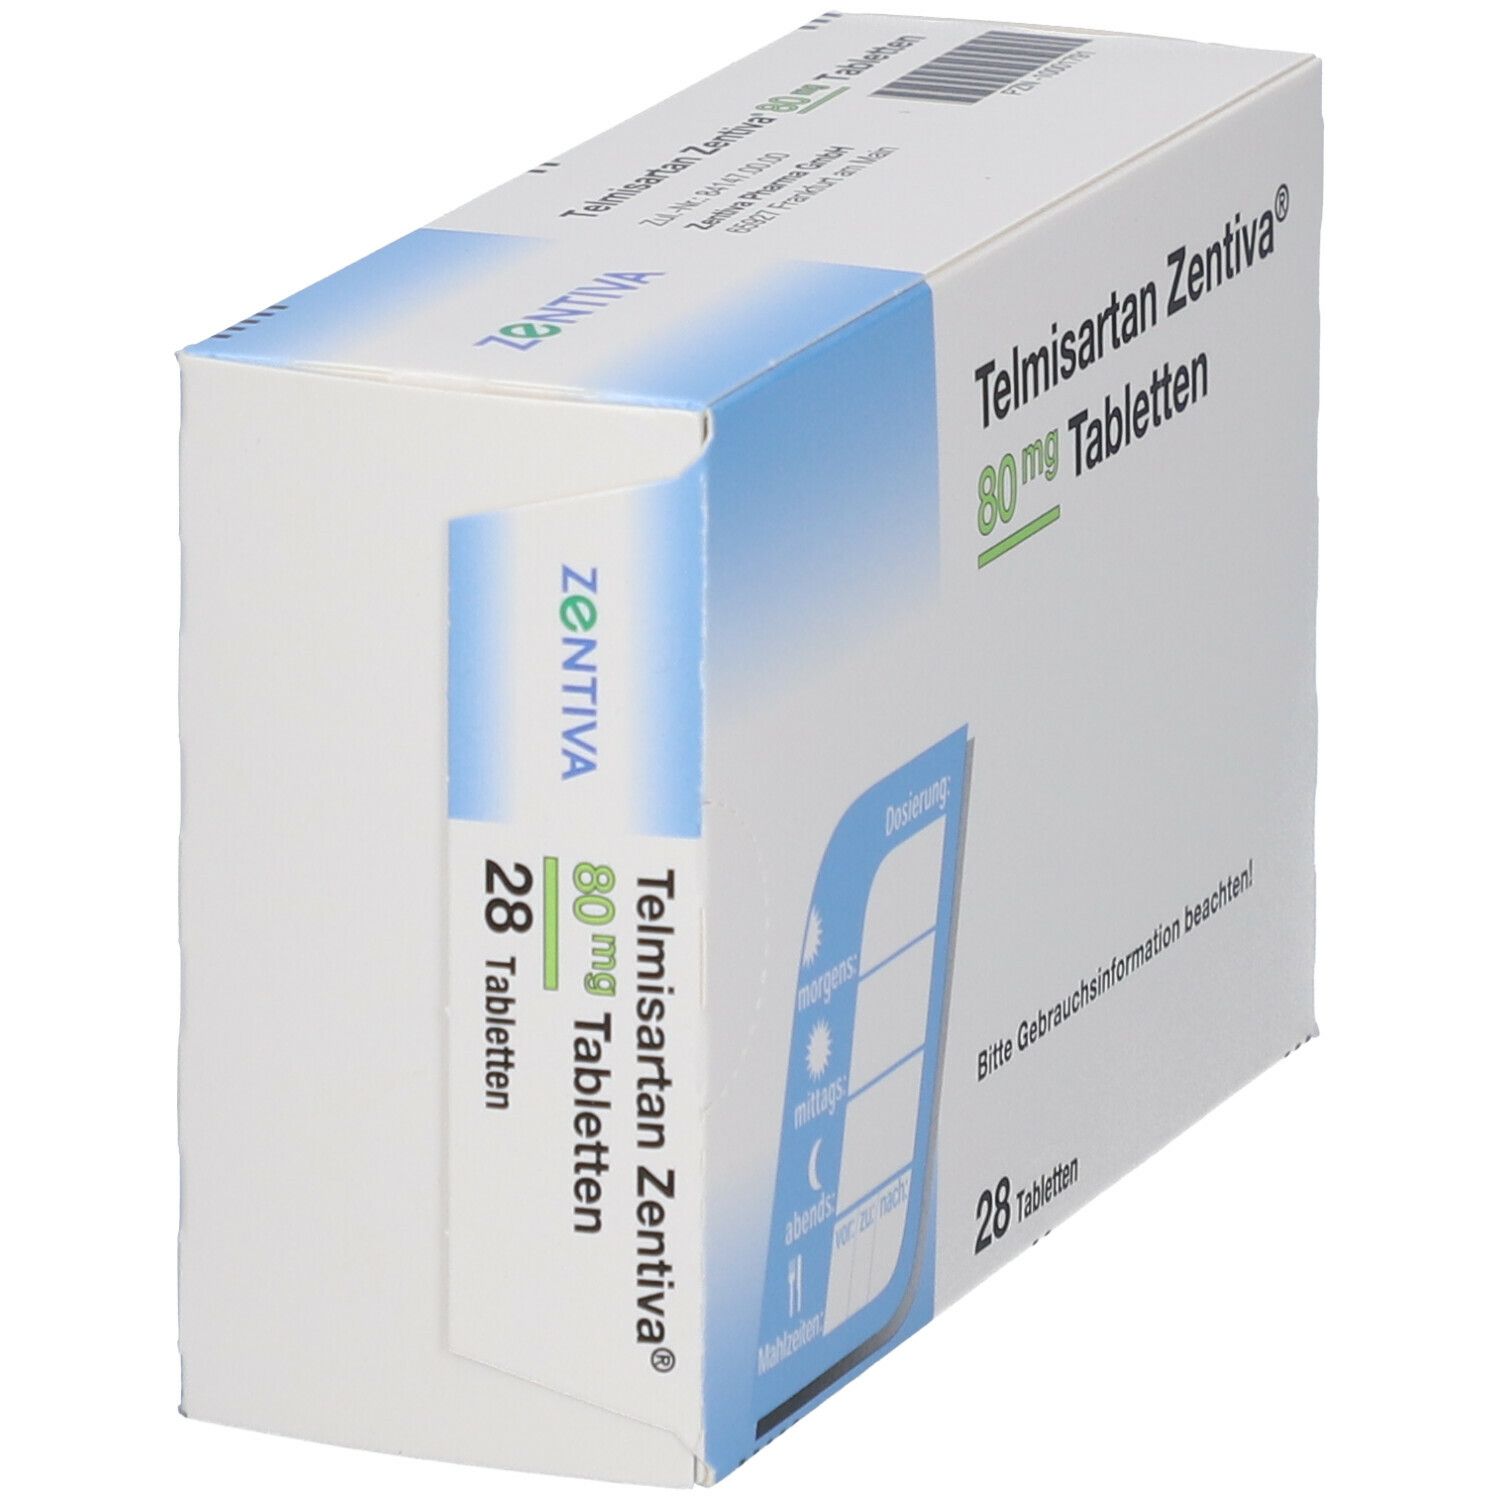 Telmisartan Zentiva® 80 mg